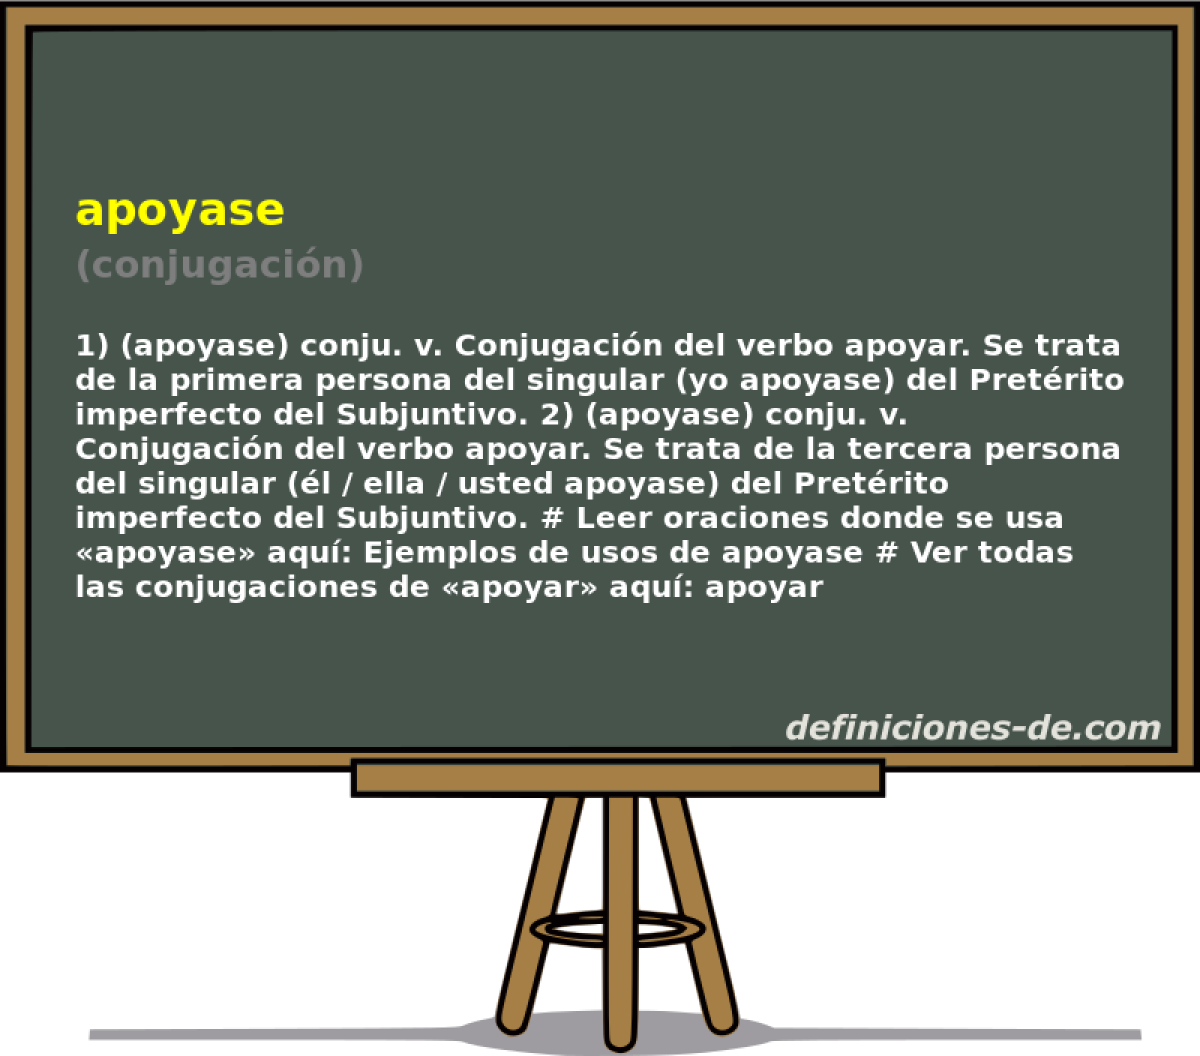 apoyase (conjugacin)